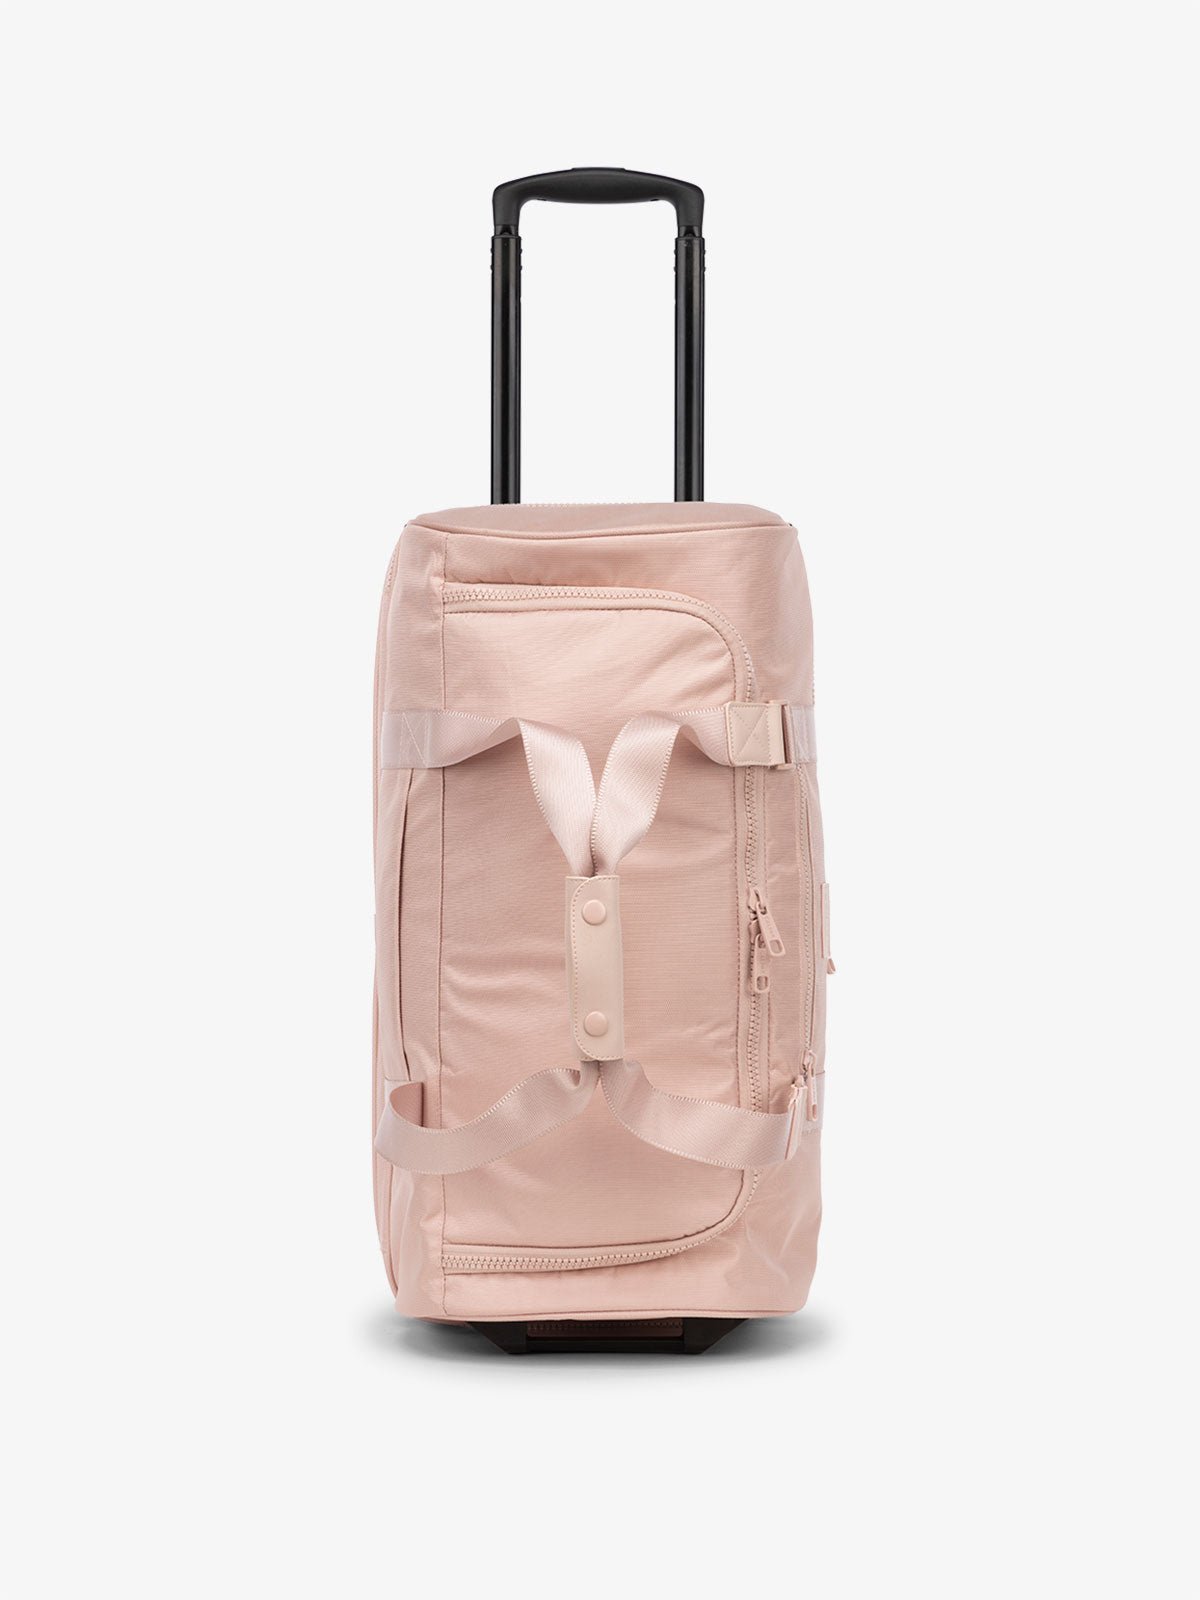 CALPAK Stevyn Rolling Duffle 22-inch bag in pink sand